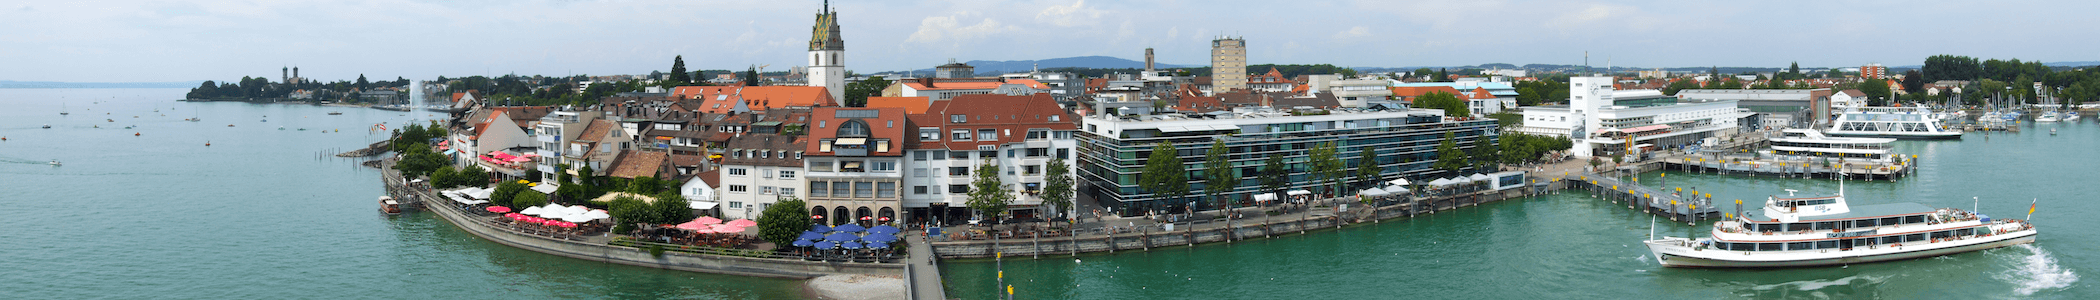 Banner image for Friedrichshafen on GigsGuide